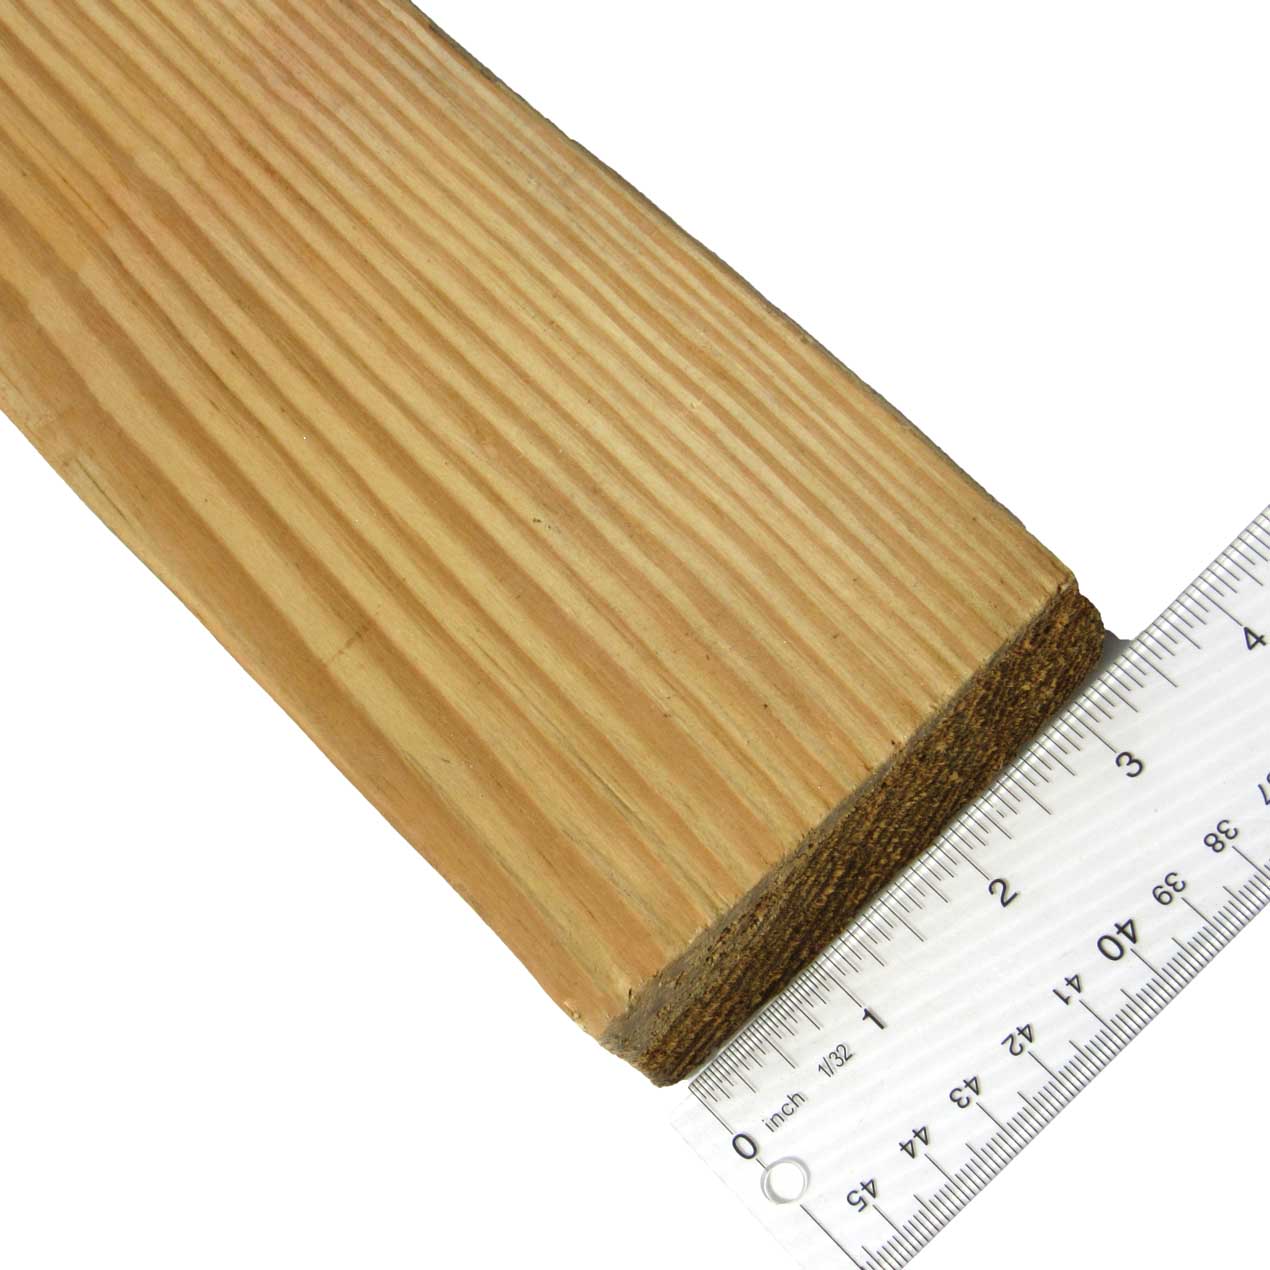 2x4 Premier KDAT Treated Lumber | Capitol City Lumber